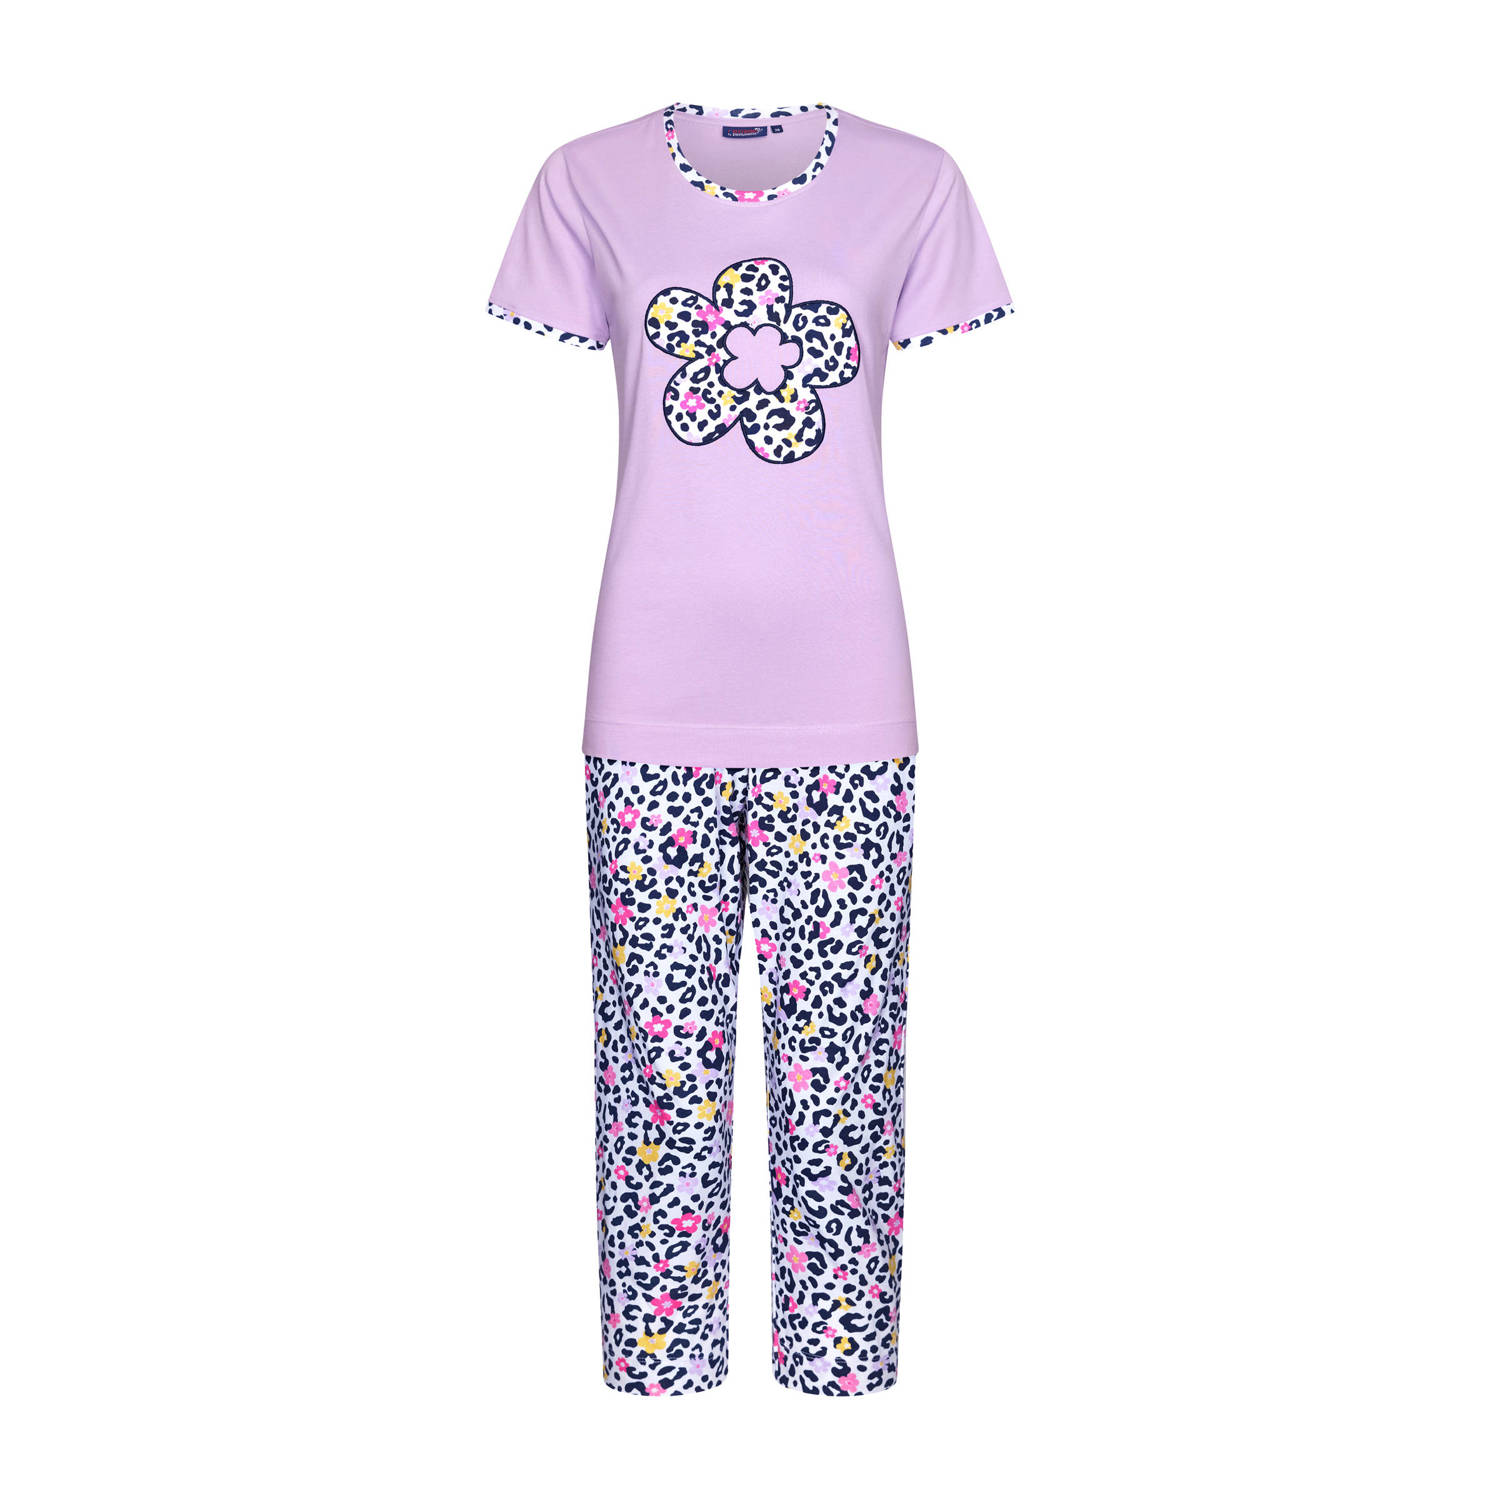 Rebelle pyjama lila multi